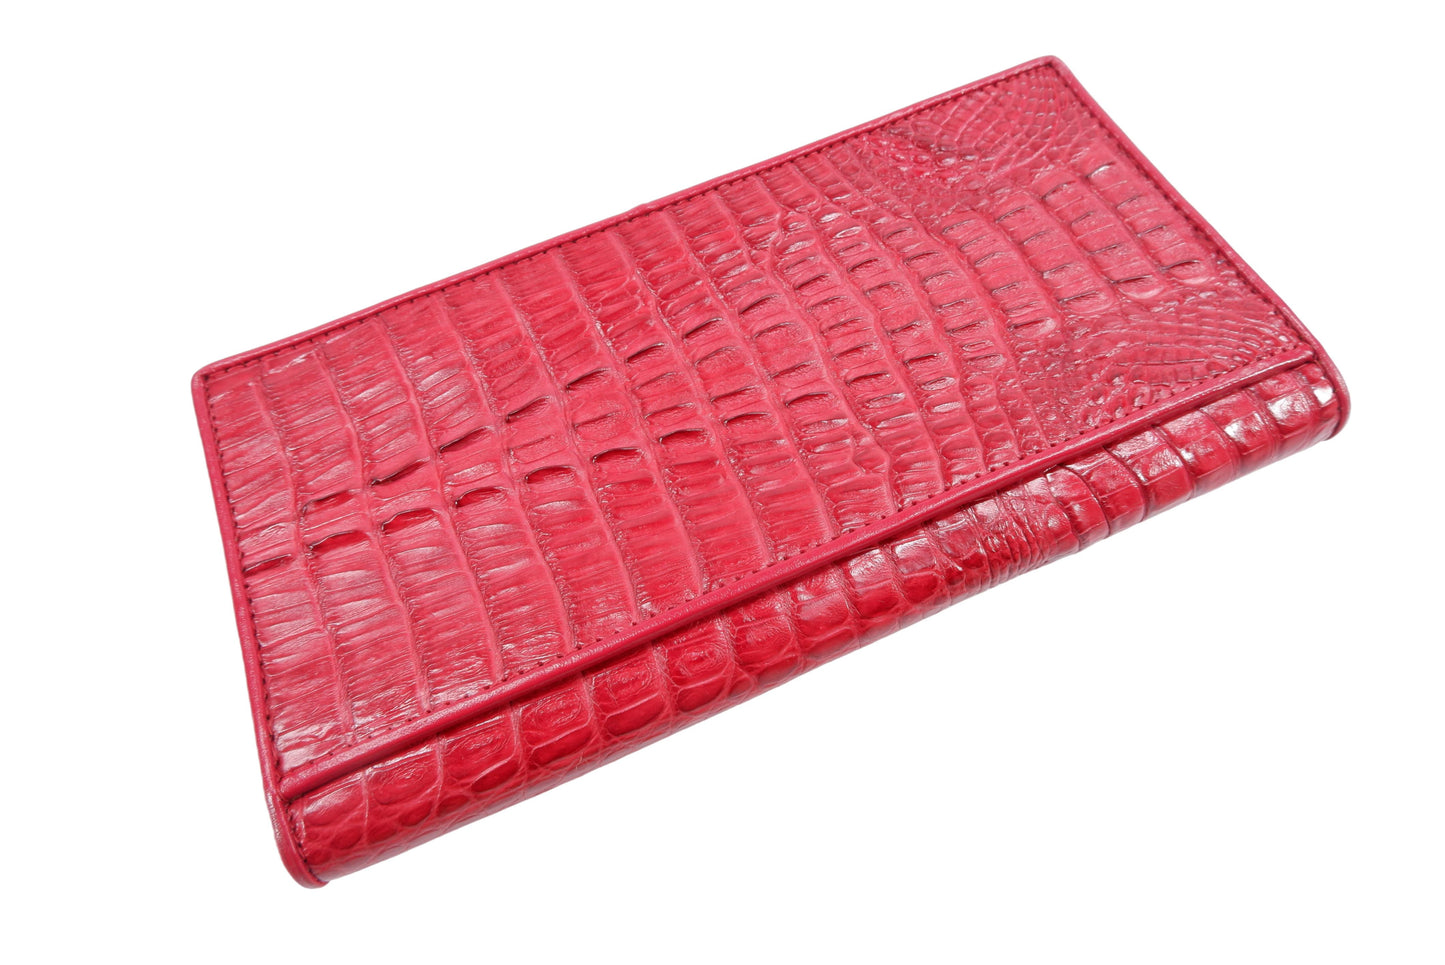 Genuine Caiman Crocodile Hornback Skin Leather Checkbook Long Wallet